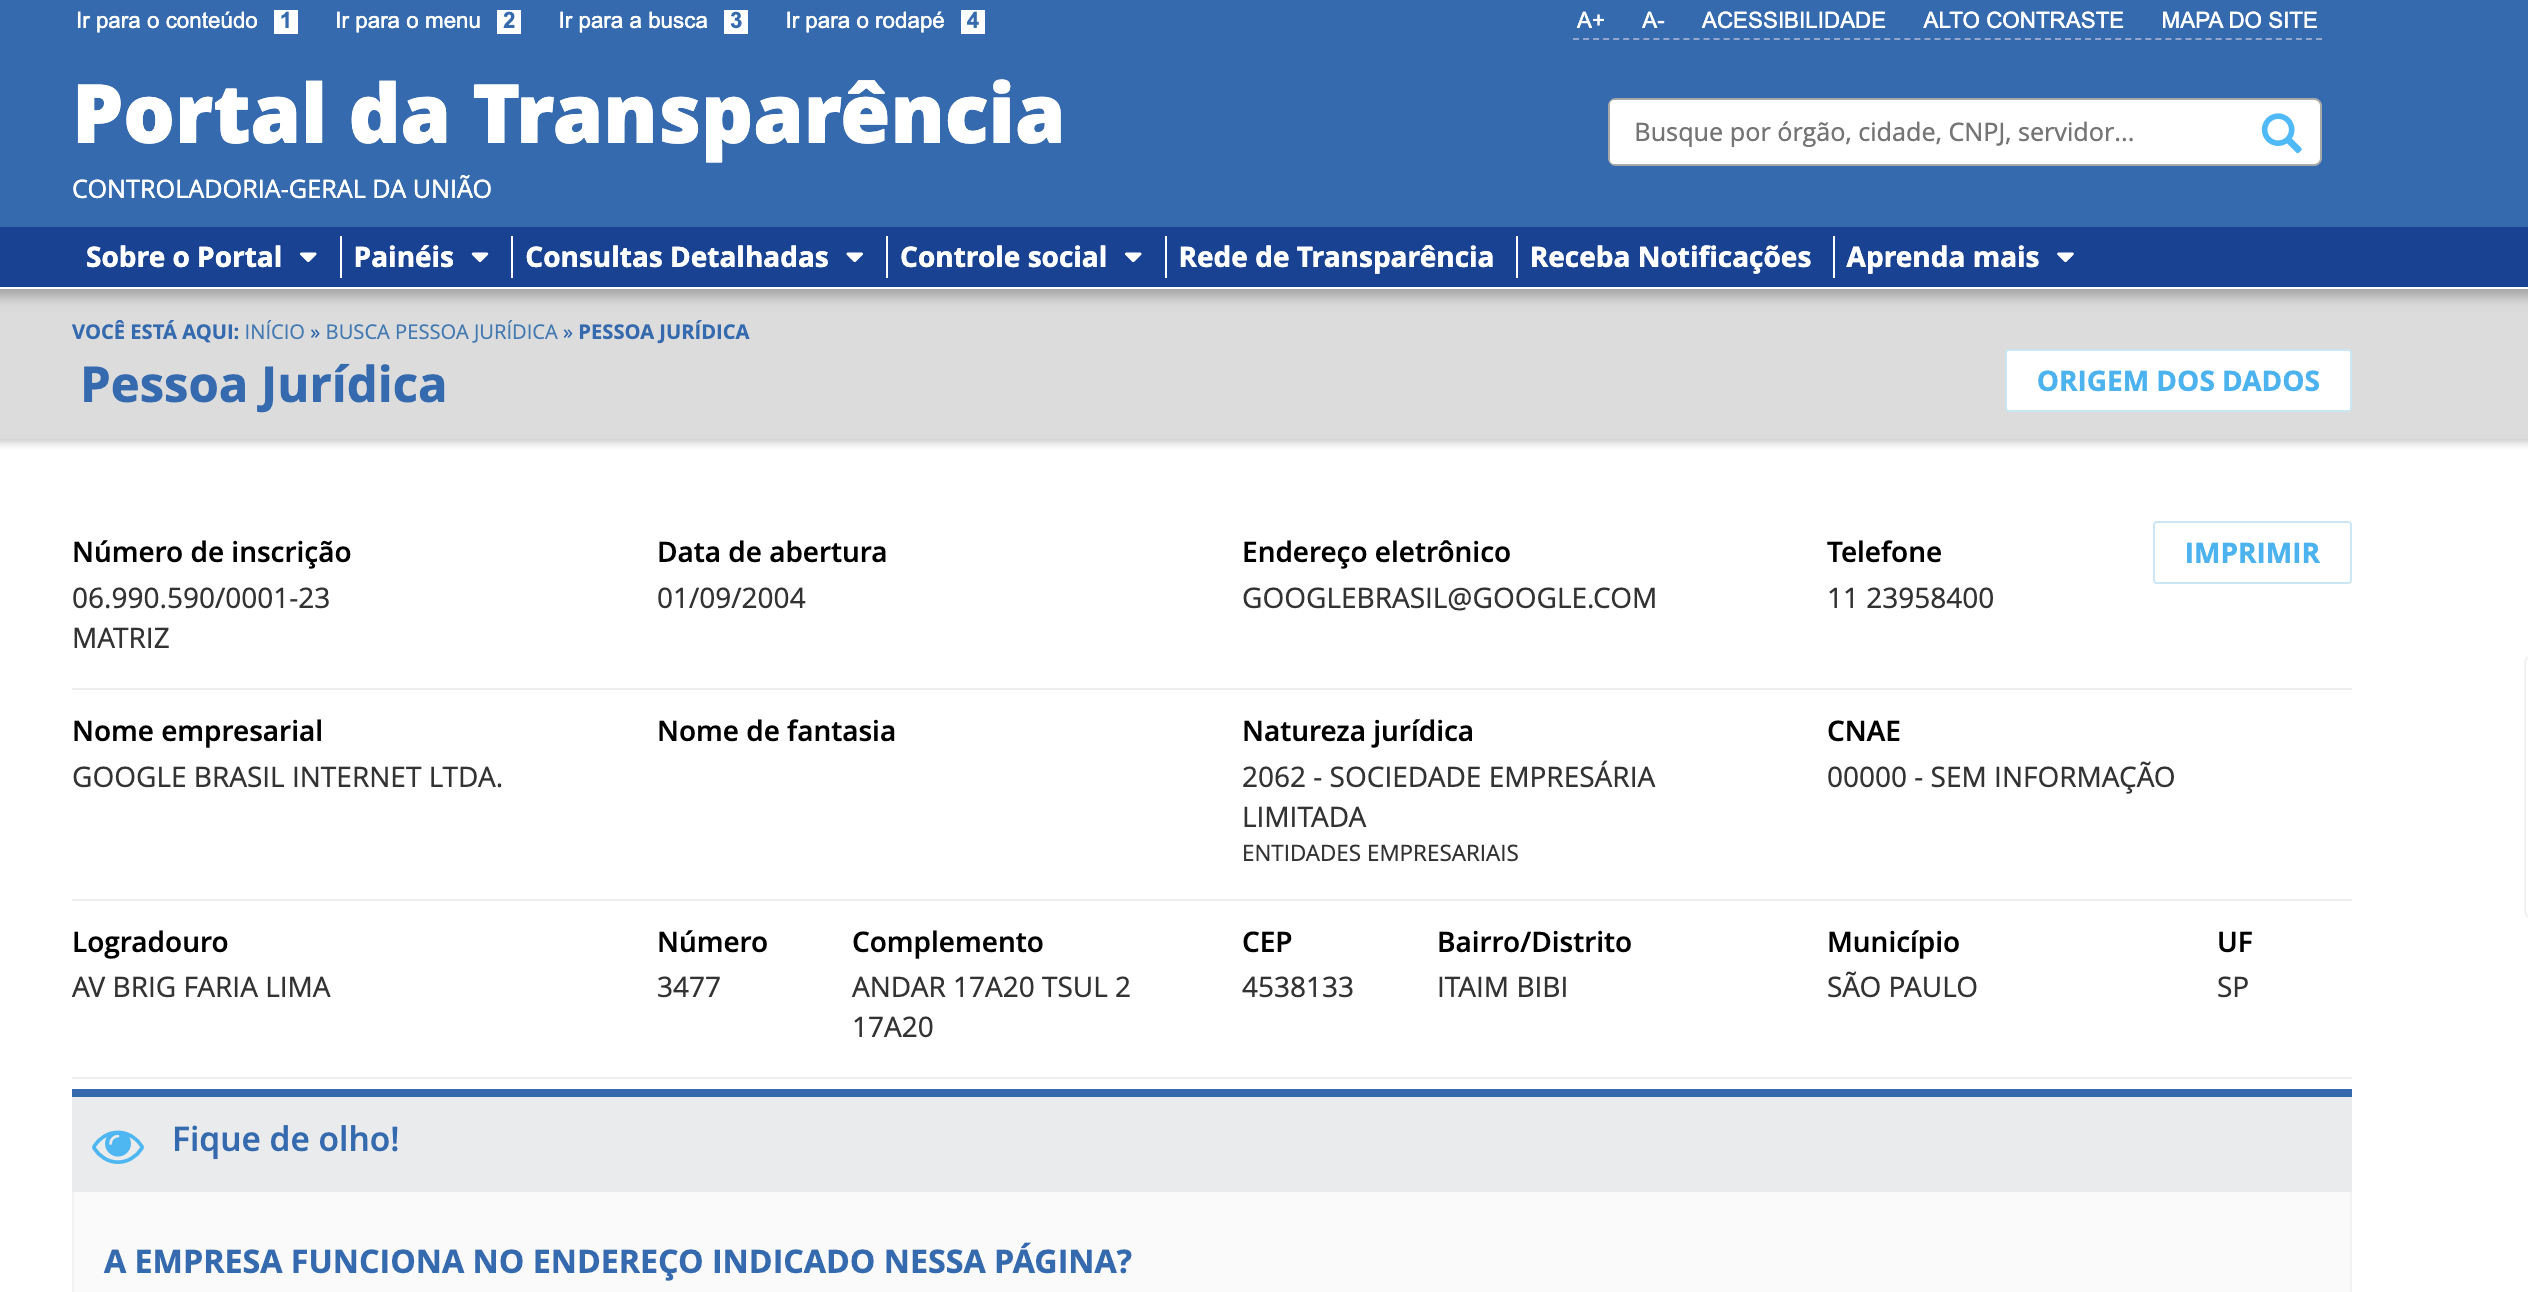 Successful CNPJ Verification on Transparency Portal